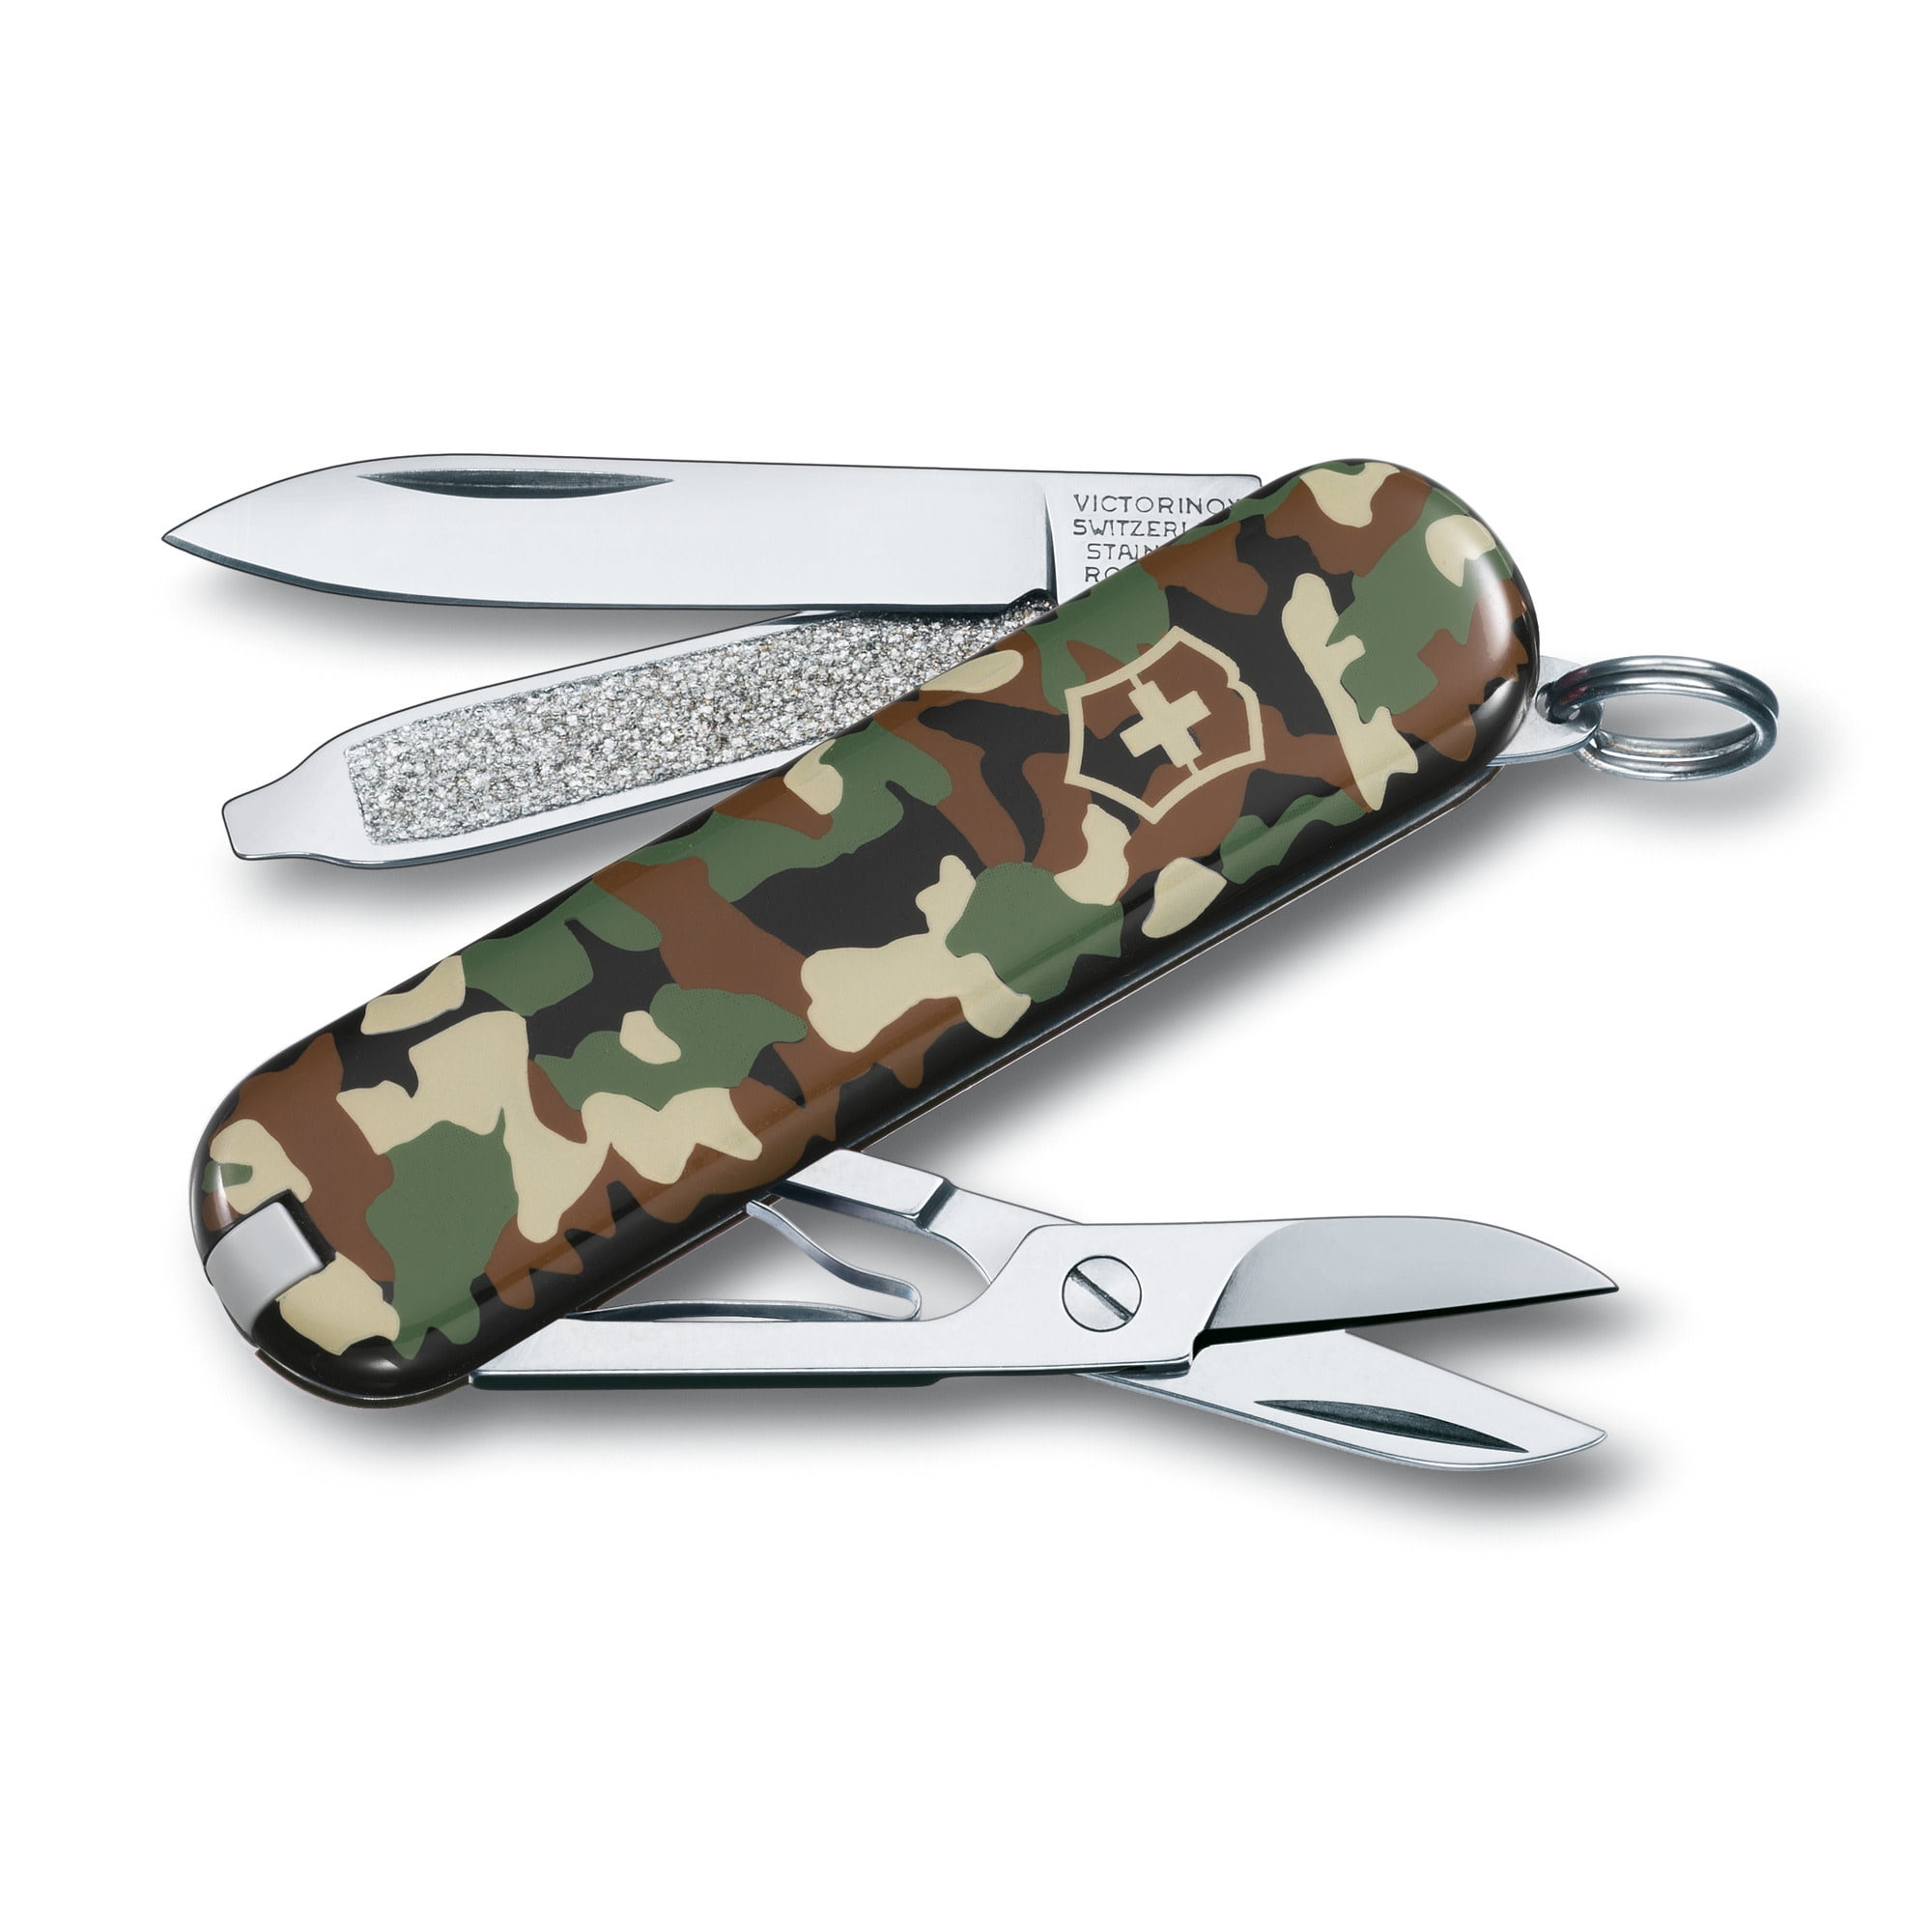  Victorinox Swiss Army Swiss Army 7 Medium Pocket Knife Grey 93  mm : Clothing, Shoes & Jewelry